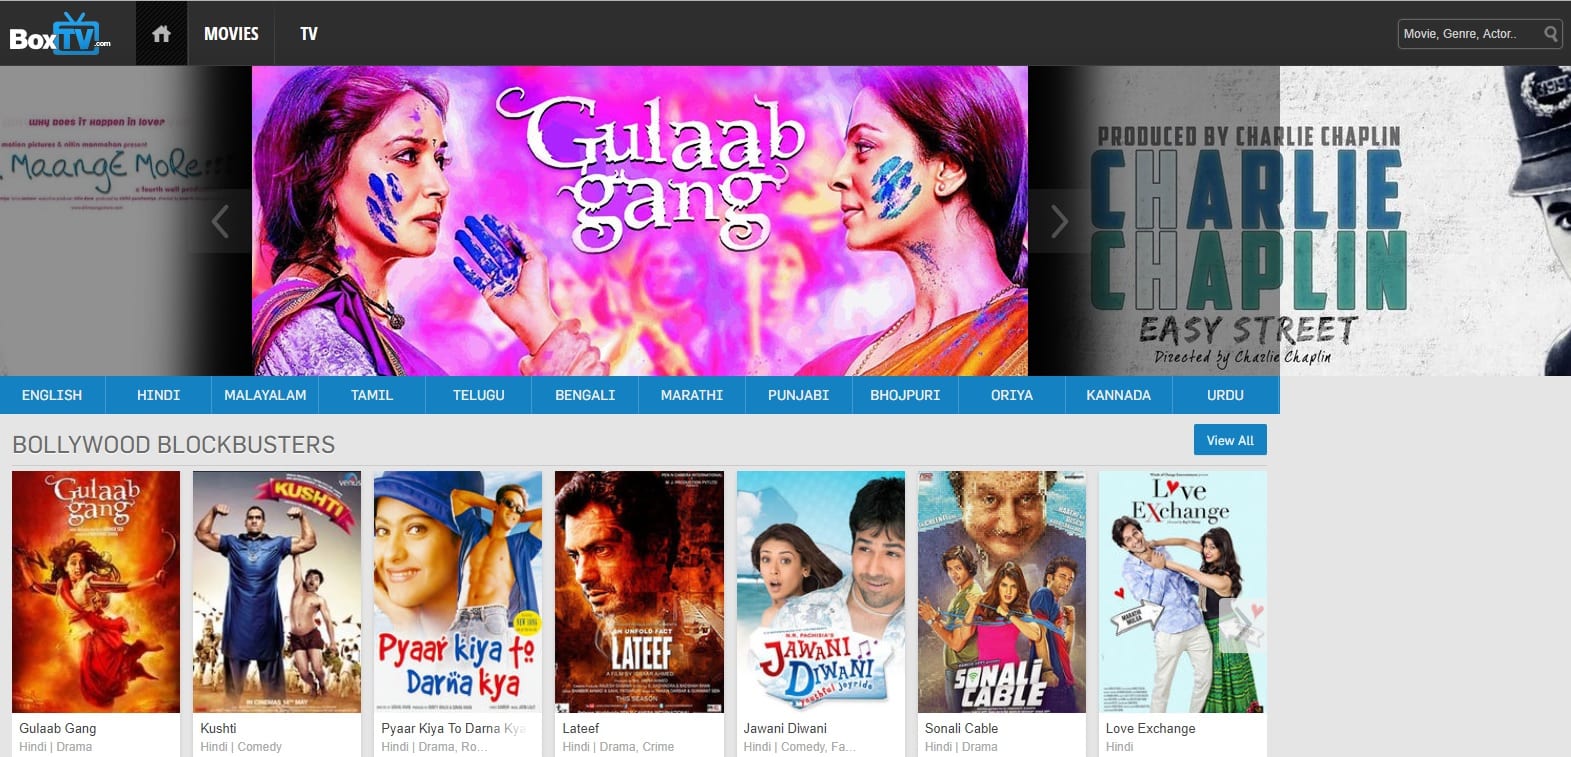 Watch Hindi Movies Online by mvfplayer00 - Issuu